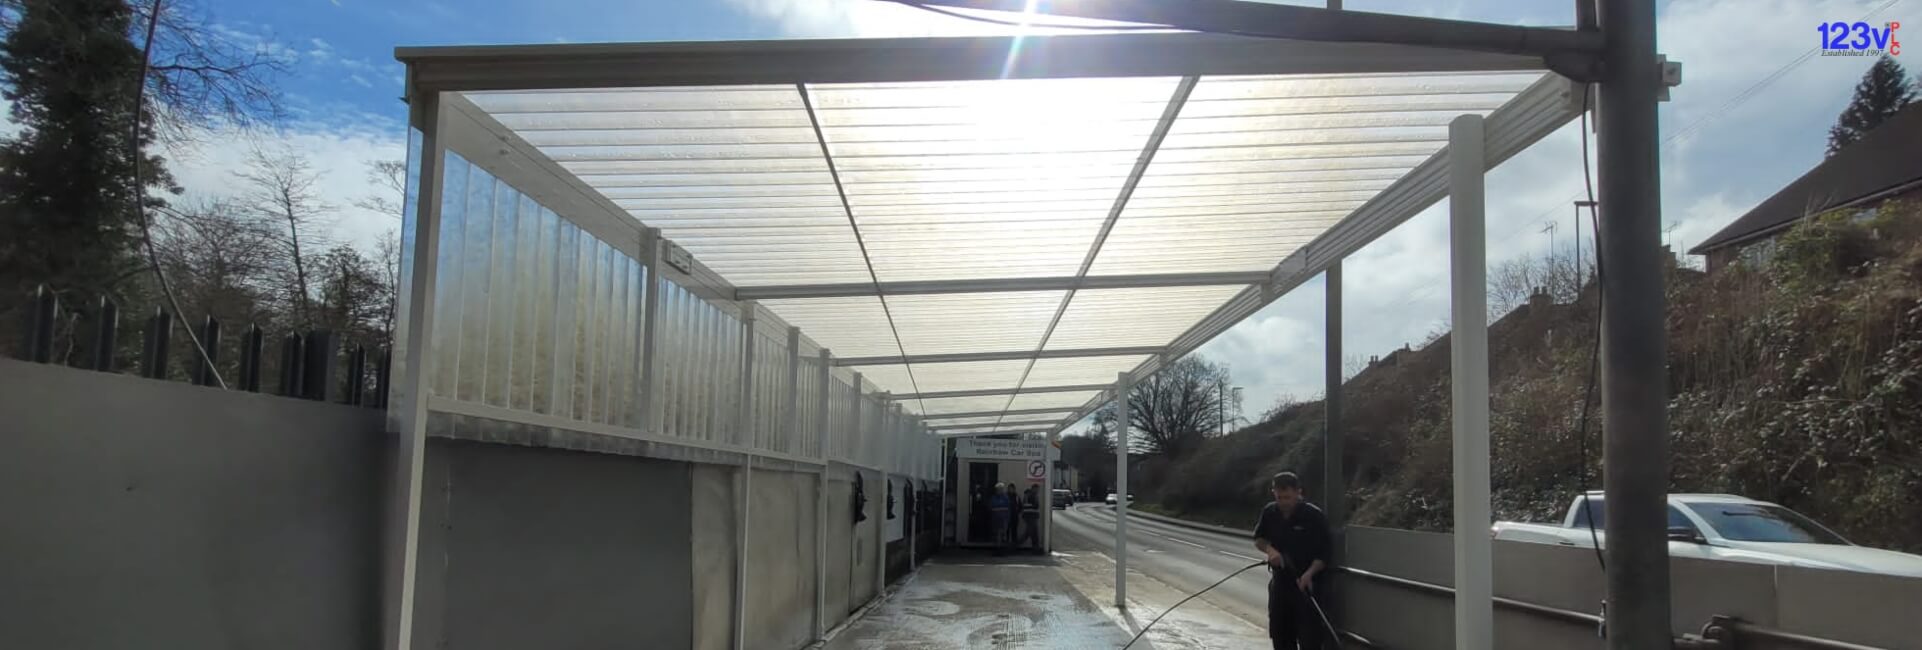 123v Commerical Canopy Shelter for Car Wash in Godlaming, Surrey